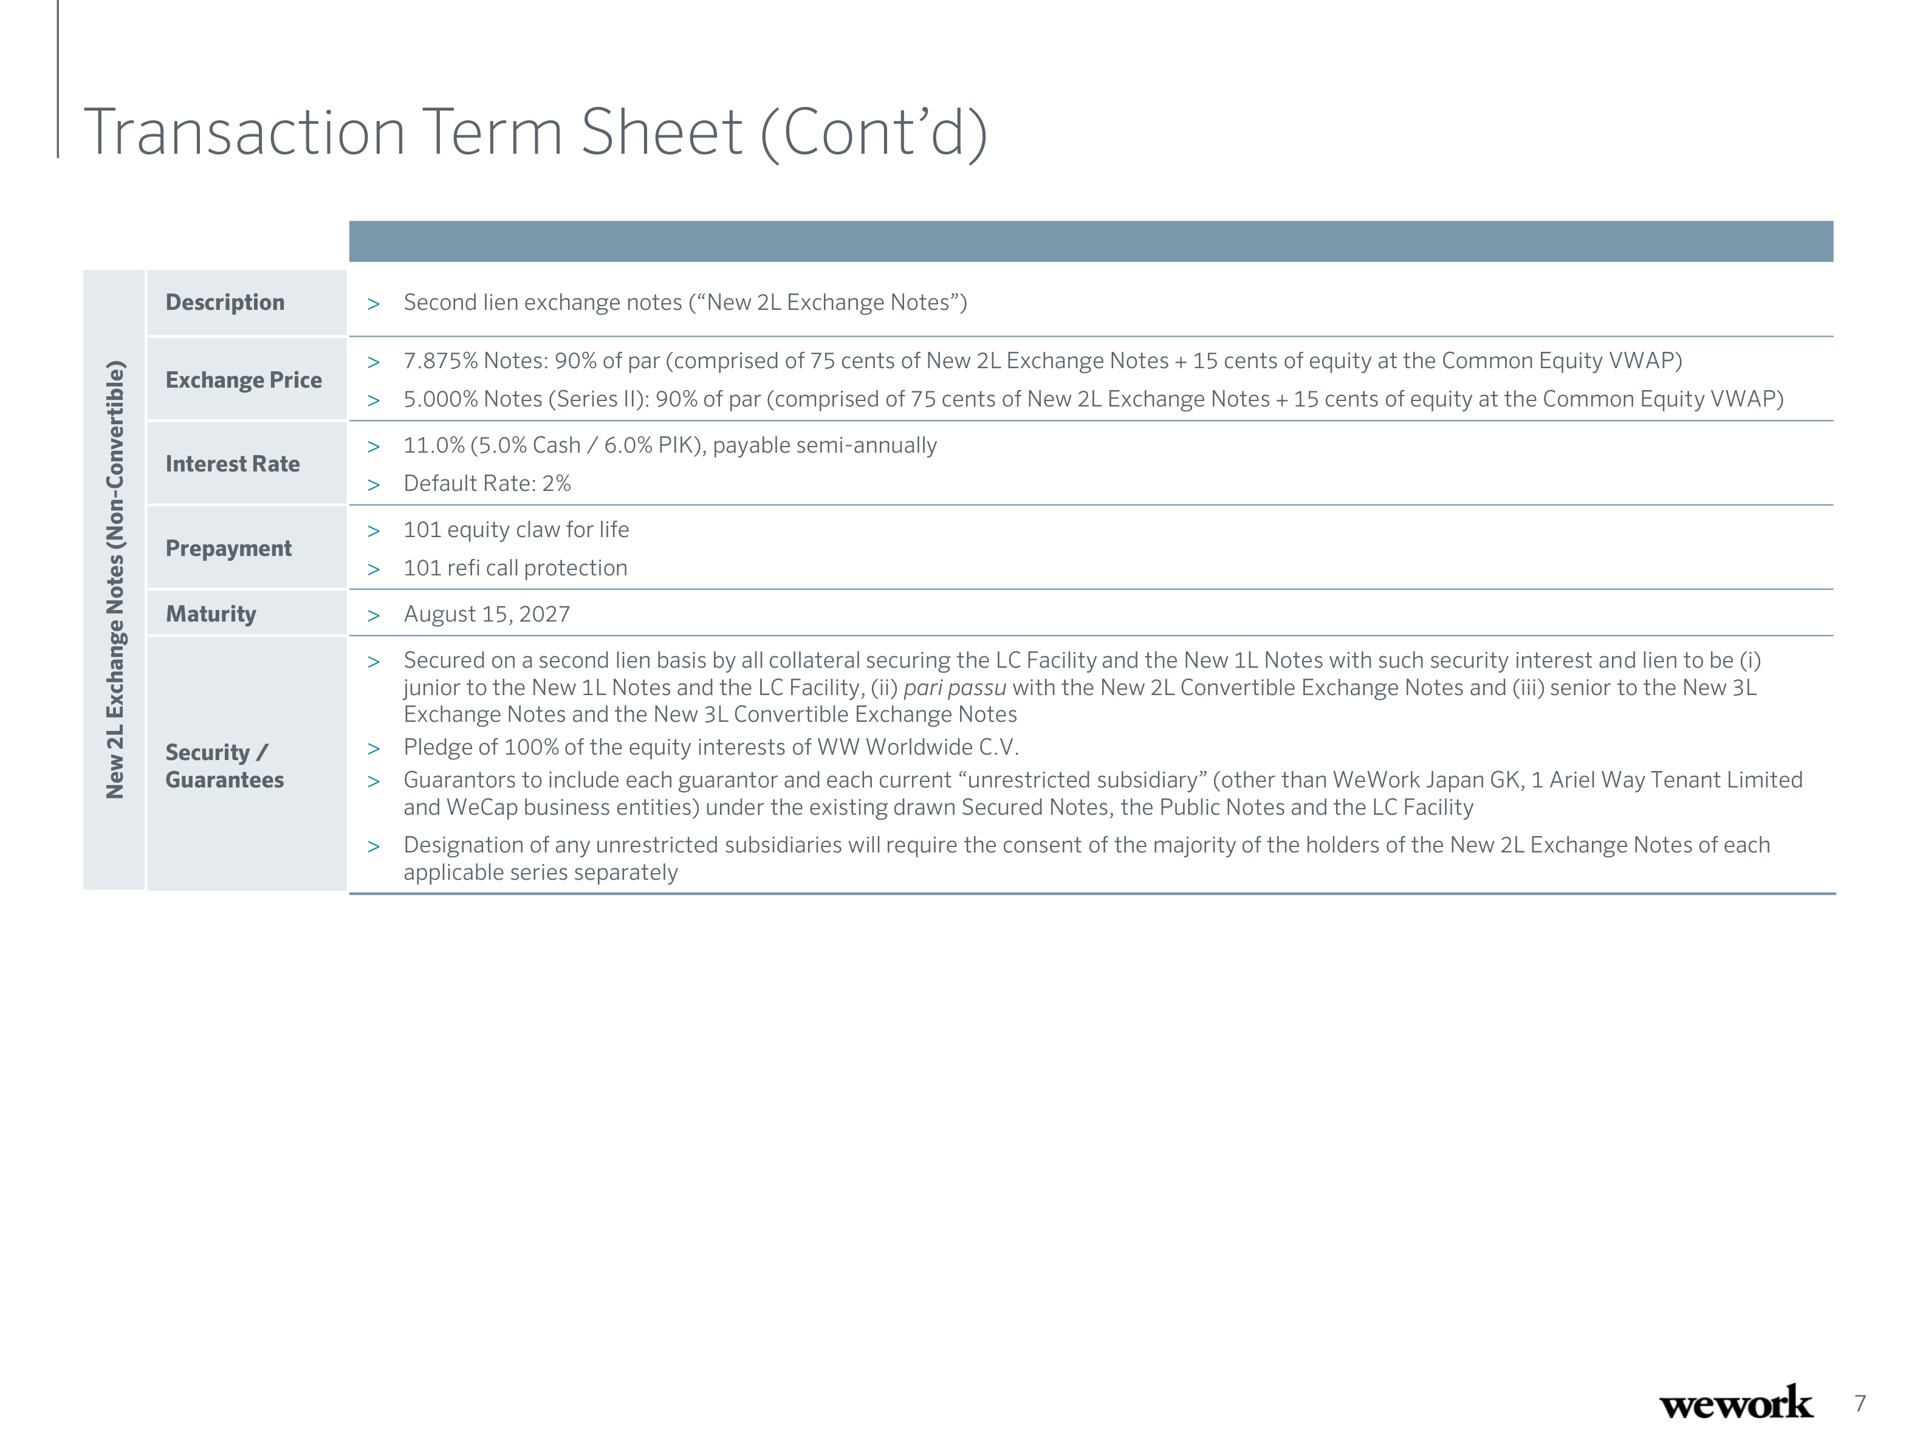 transaction term sheet | WeWork